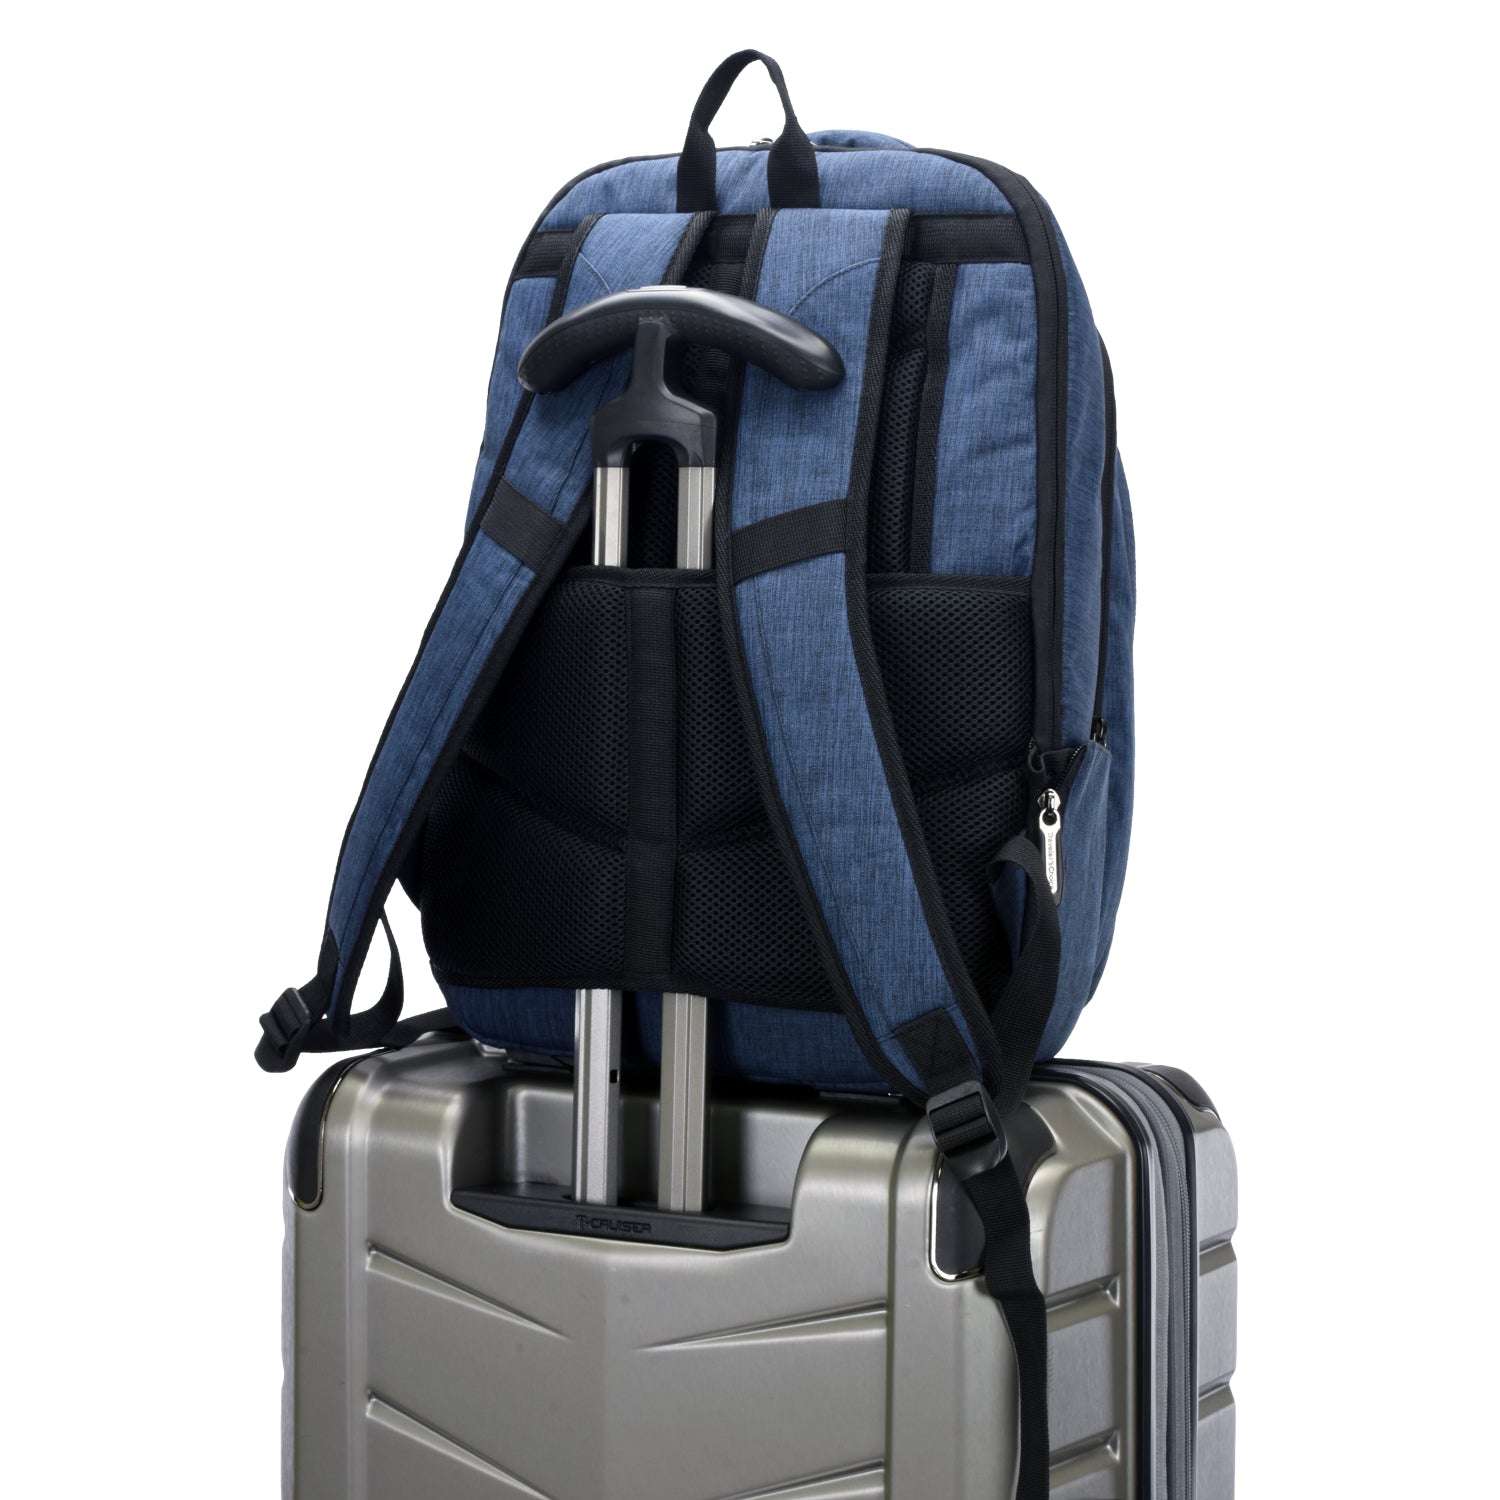 Silverwood Travel Backpack – Traveler's Choice